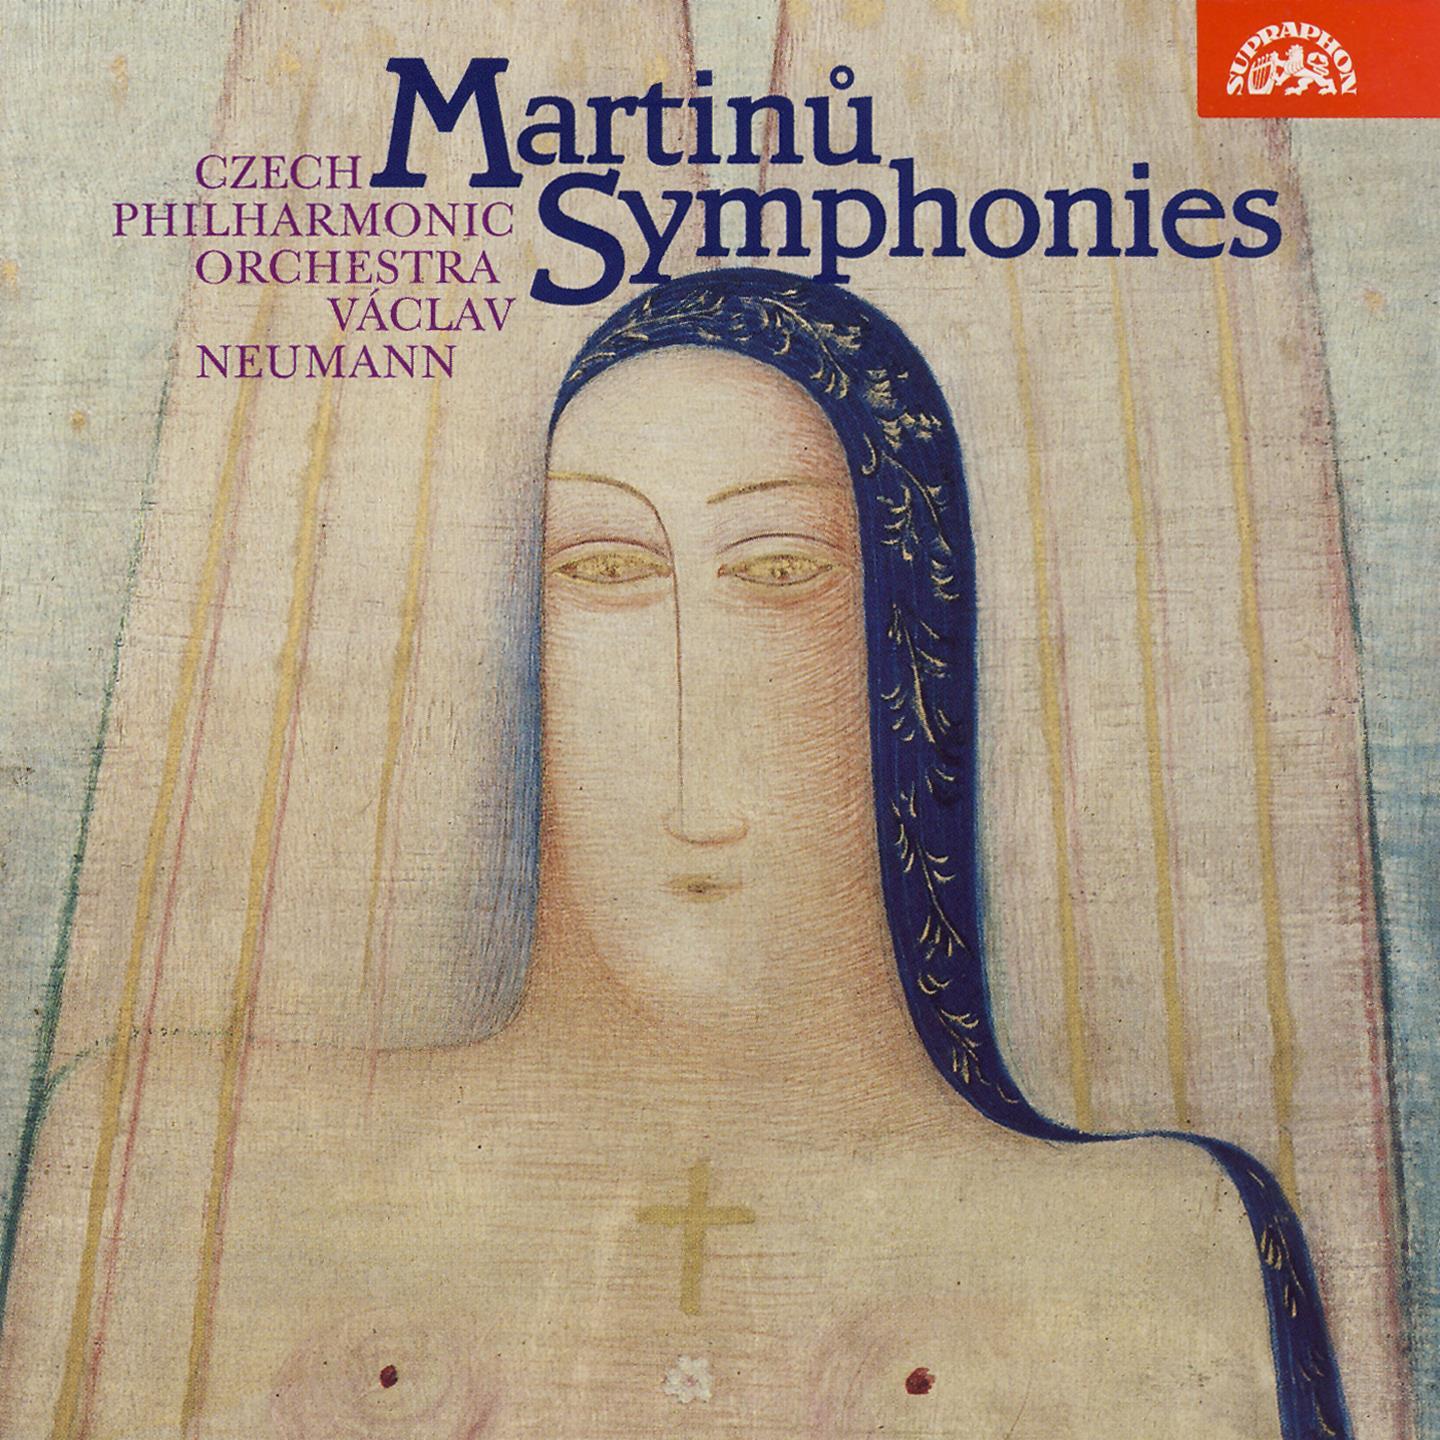 Symphony No. 6, H. 343 "Fantaisies symphoniques": III. Lento